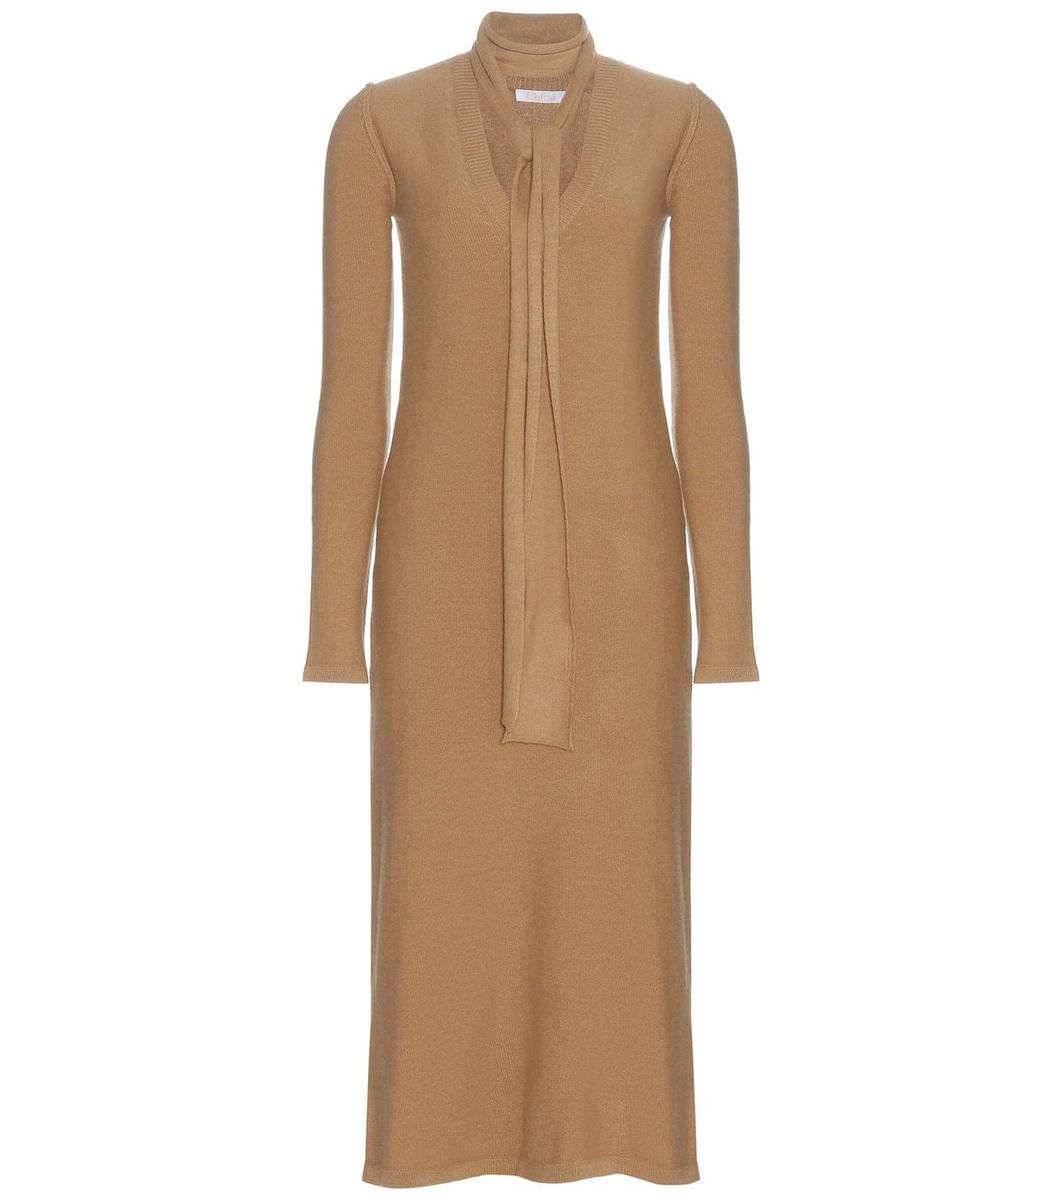 Vestido camel, Chloé (525 €)